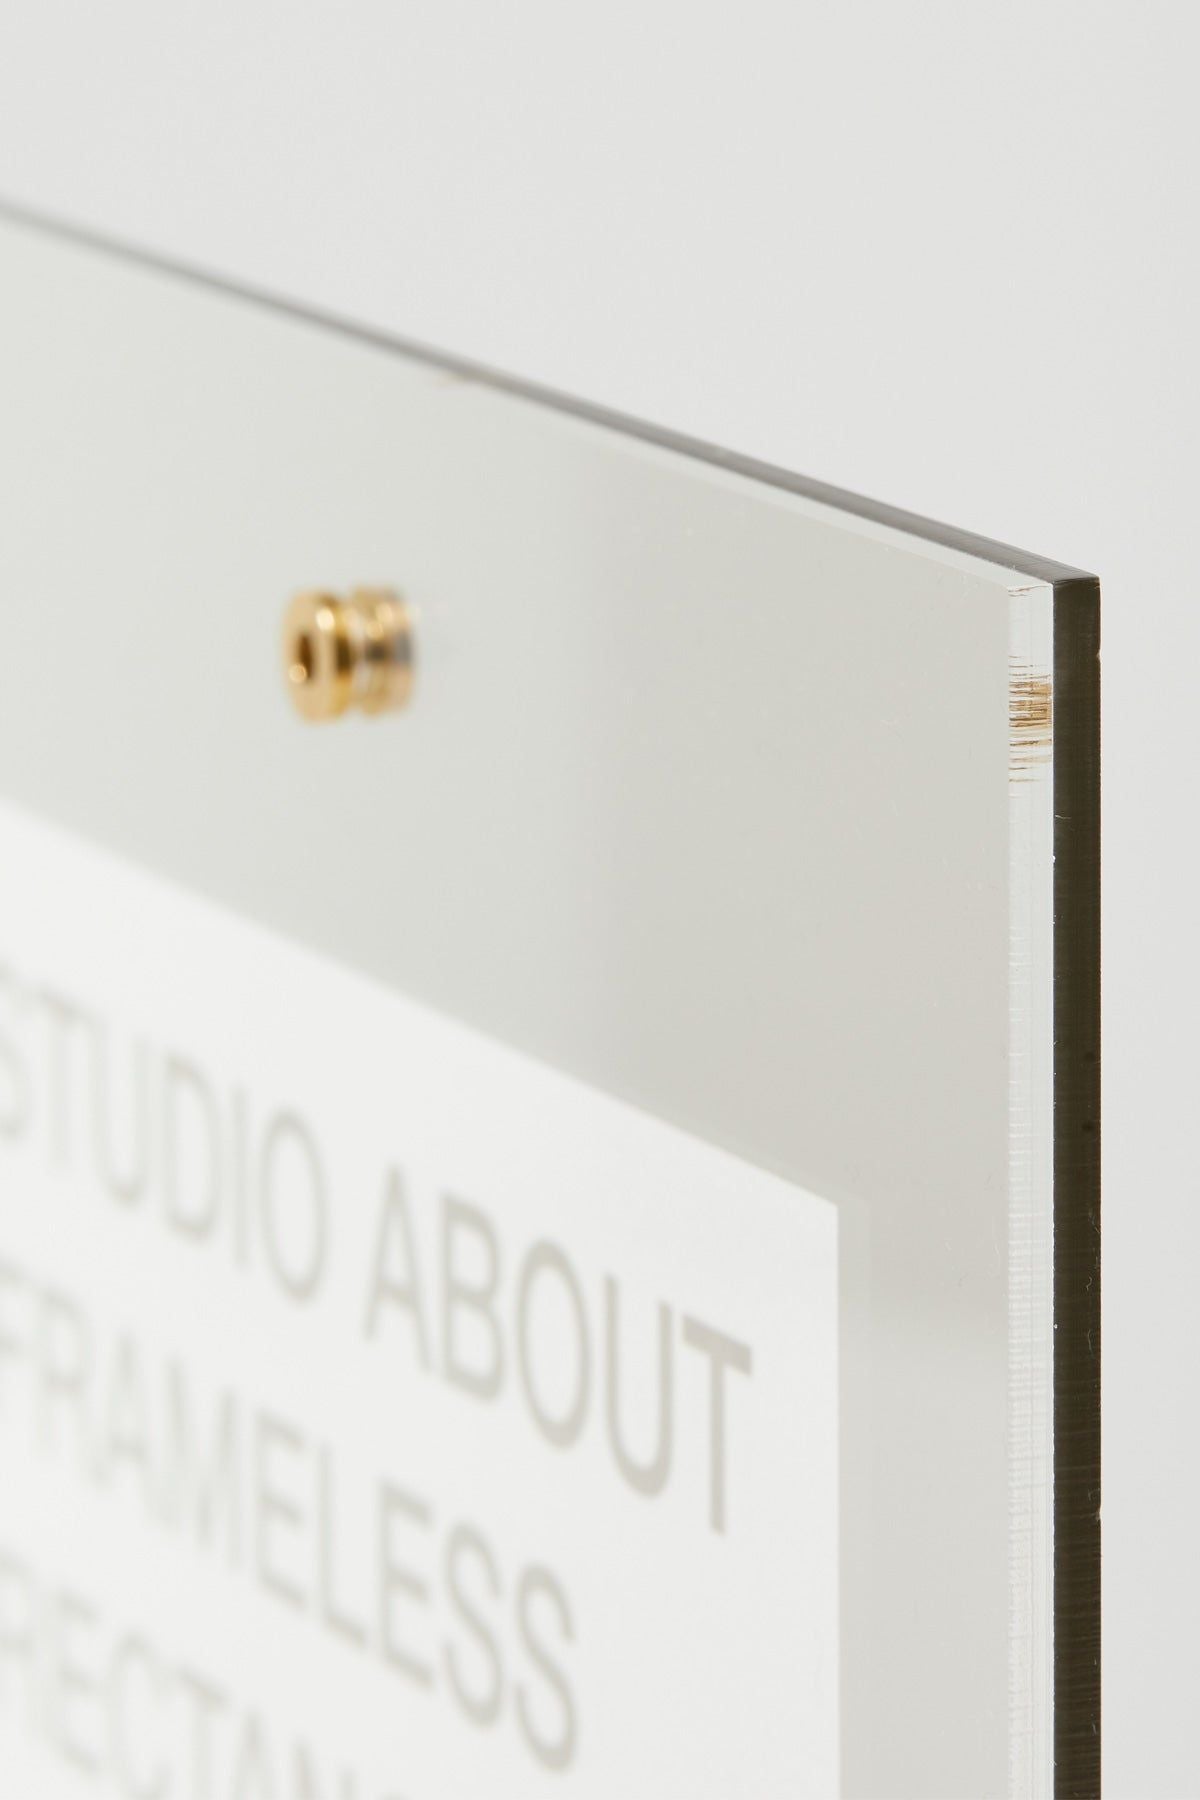 Studio over frameless frame A3 -rechthoek, rook